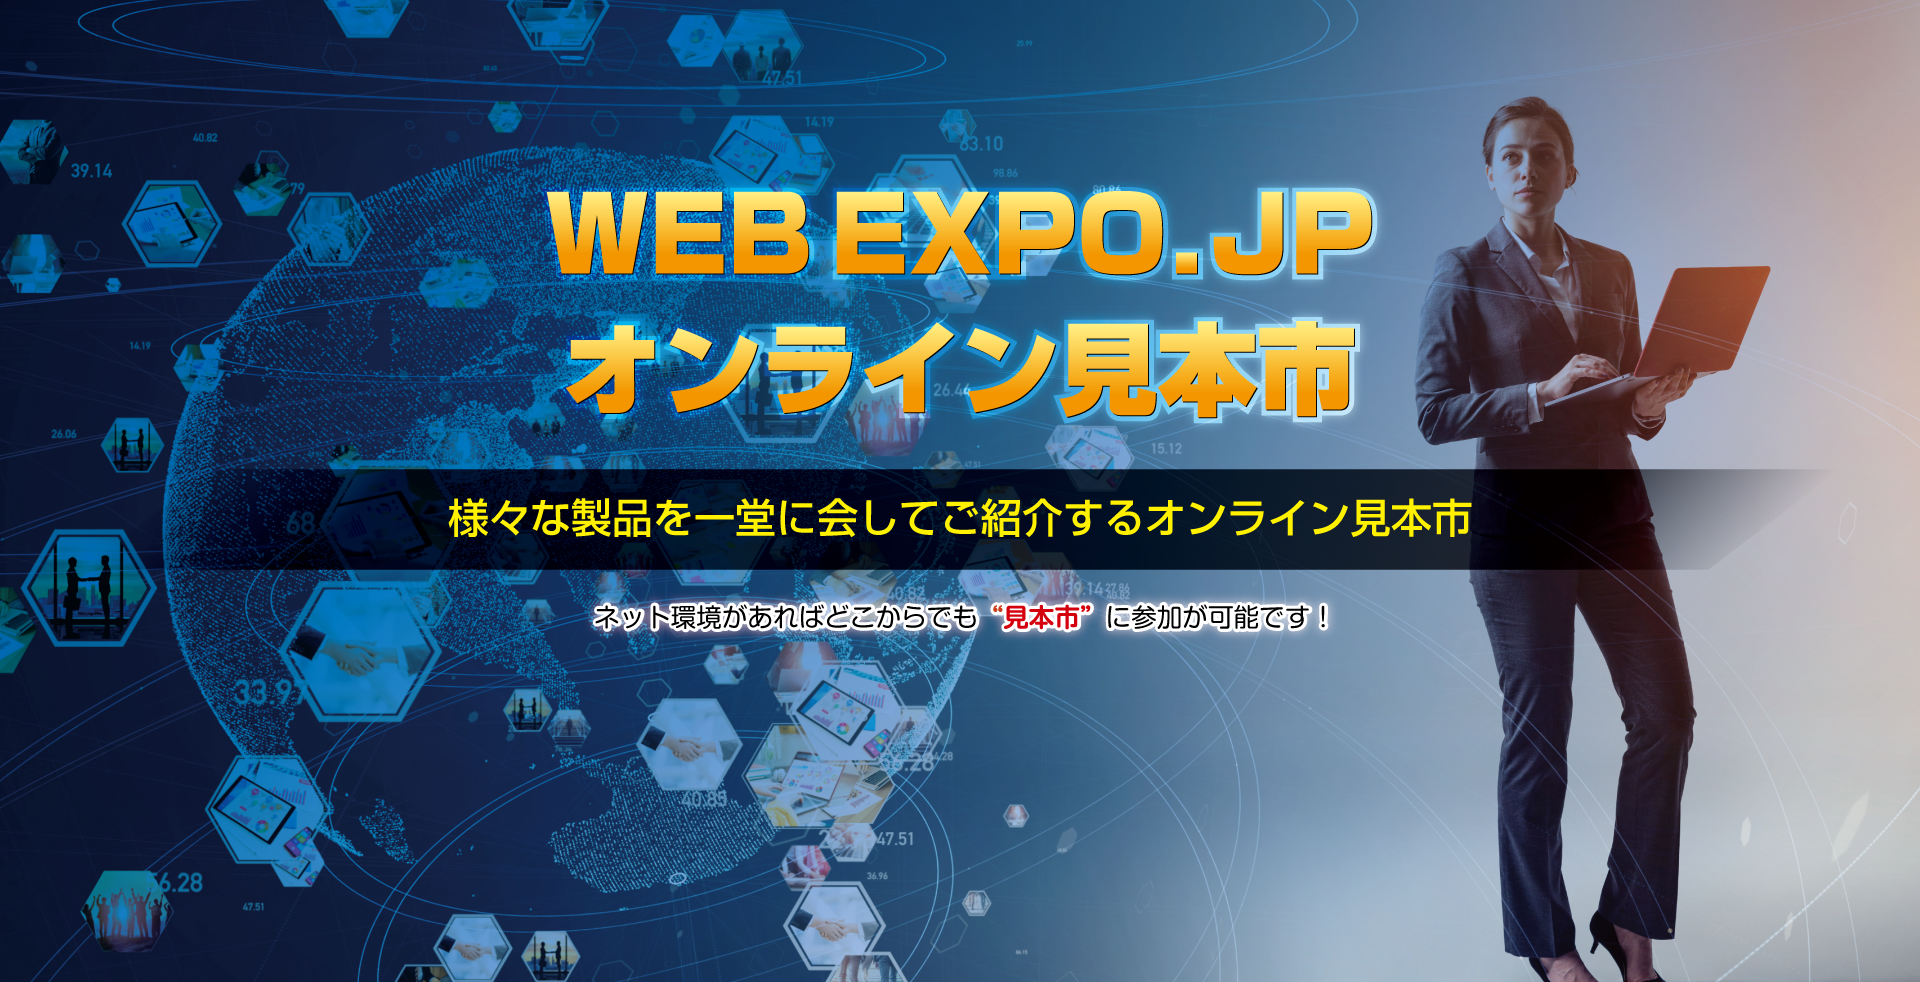 WEBEXPO.jp オンライン見本市